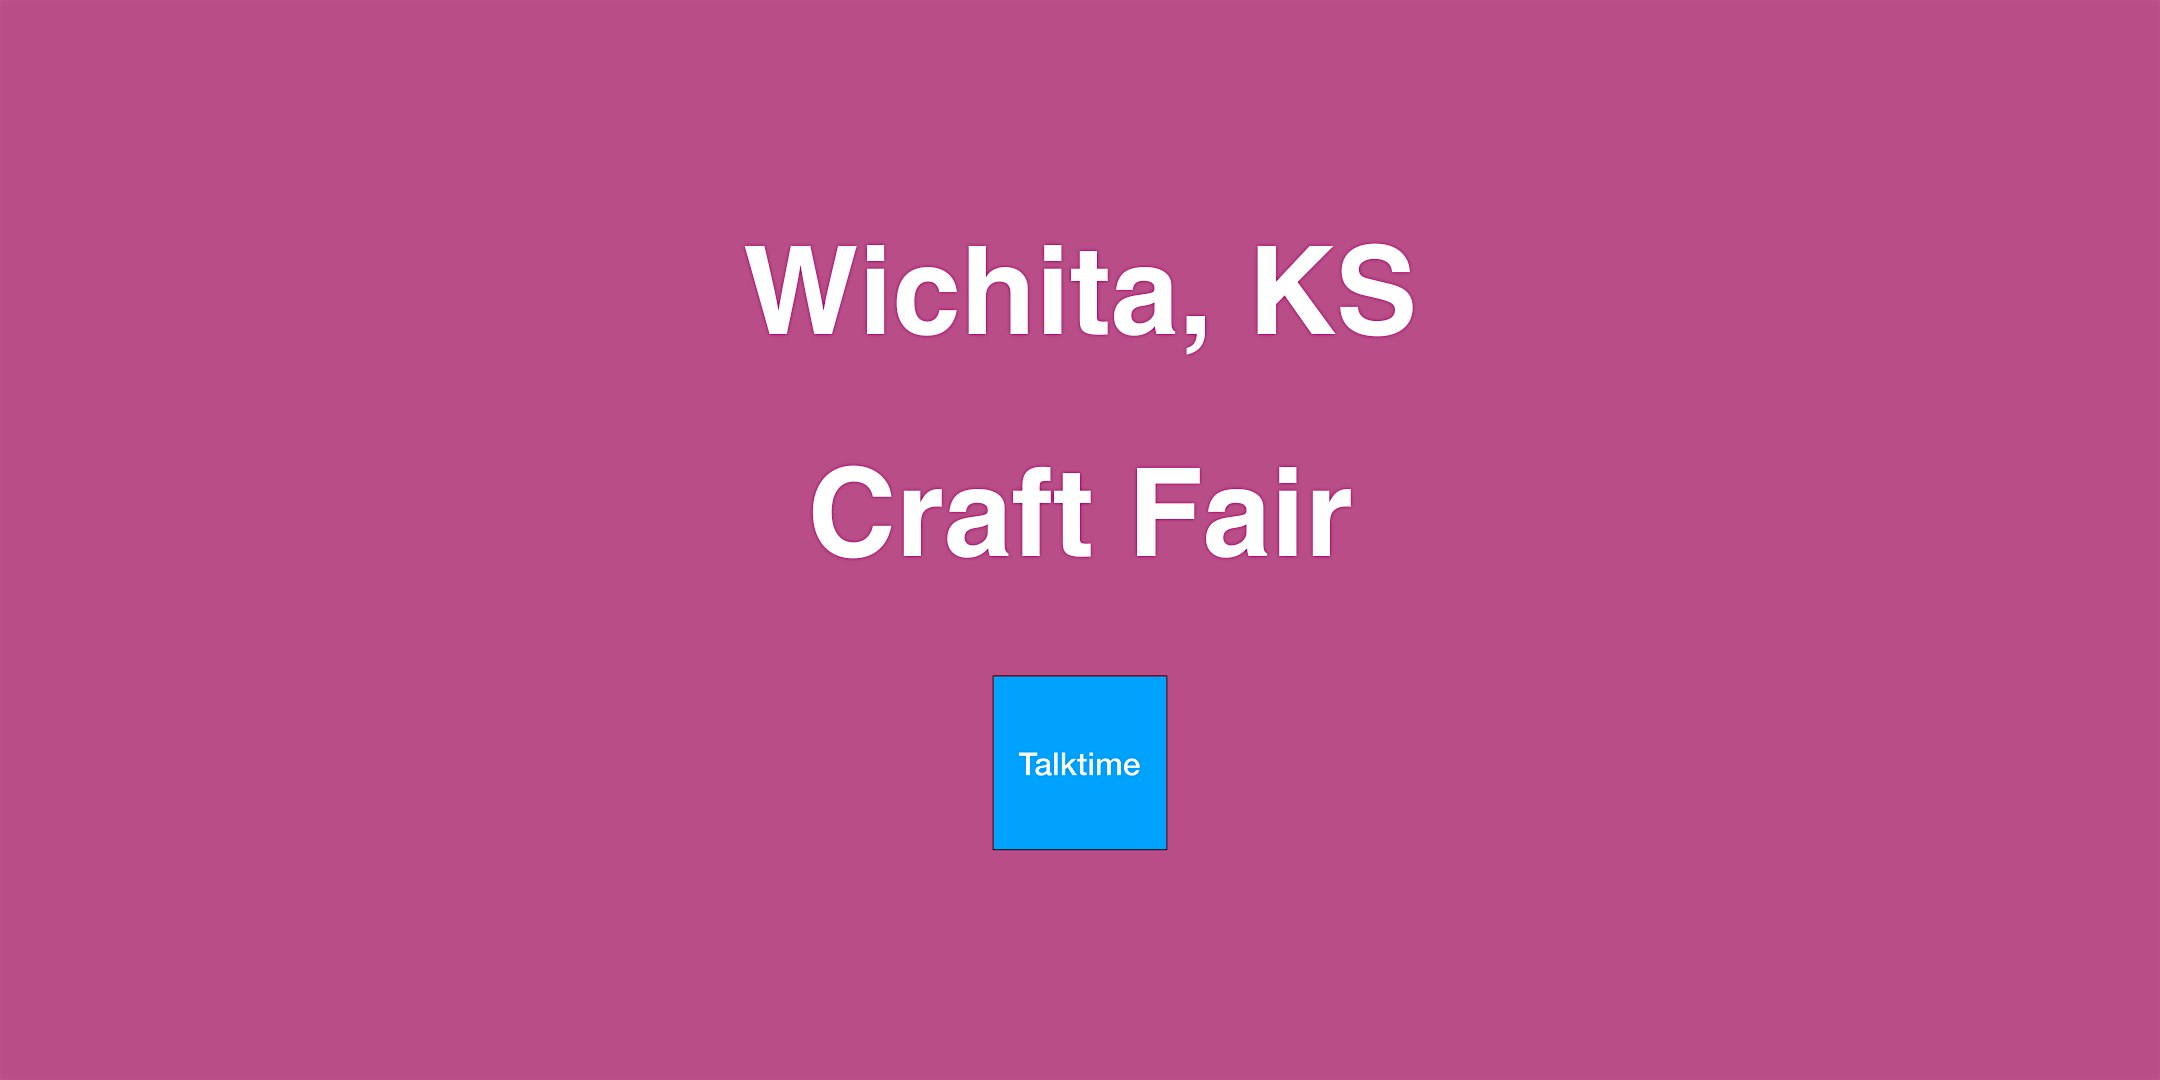 Craft Fair - Wichita